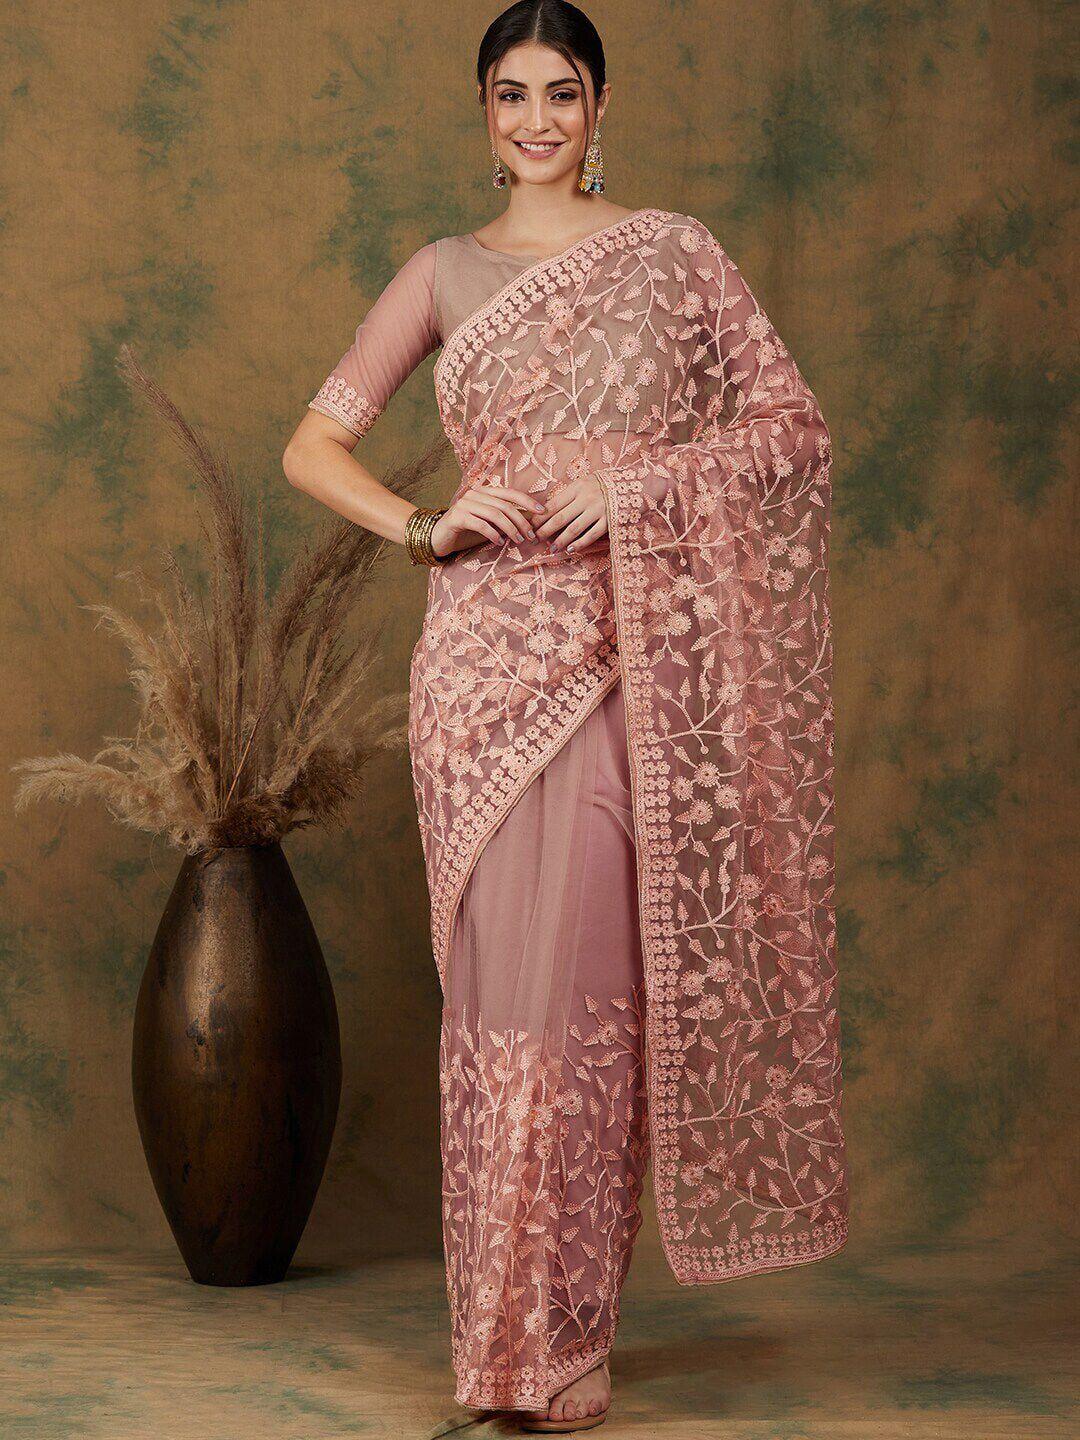 nimayaa floral embroidered net saree